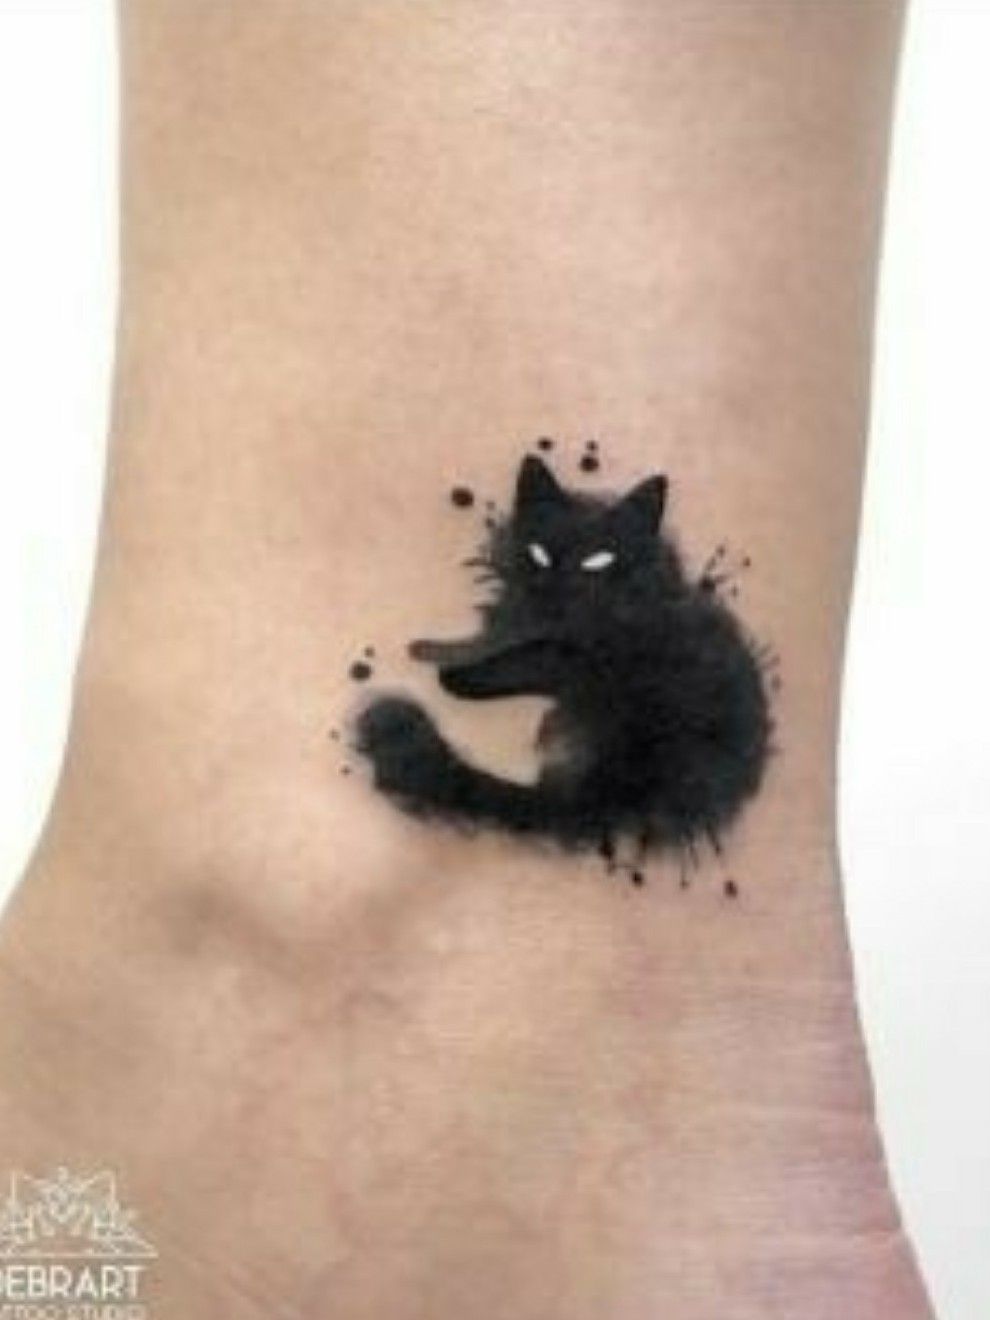 Cat Eye Tattoo practice by TragykMagyk on DeviantArt